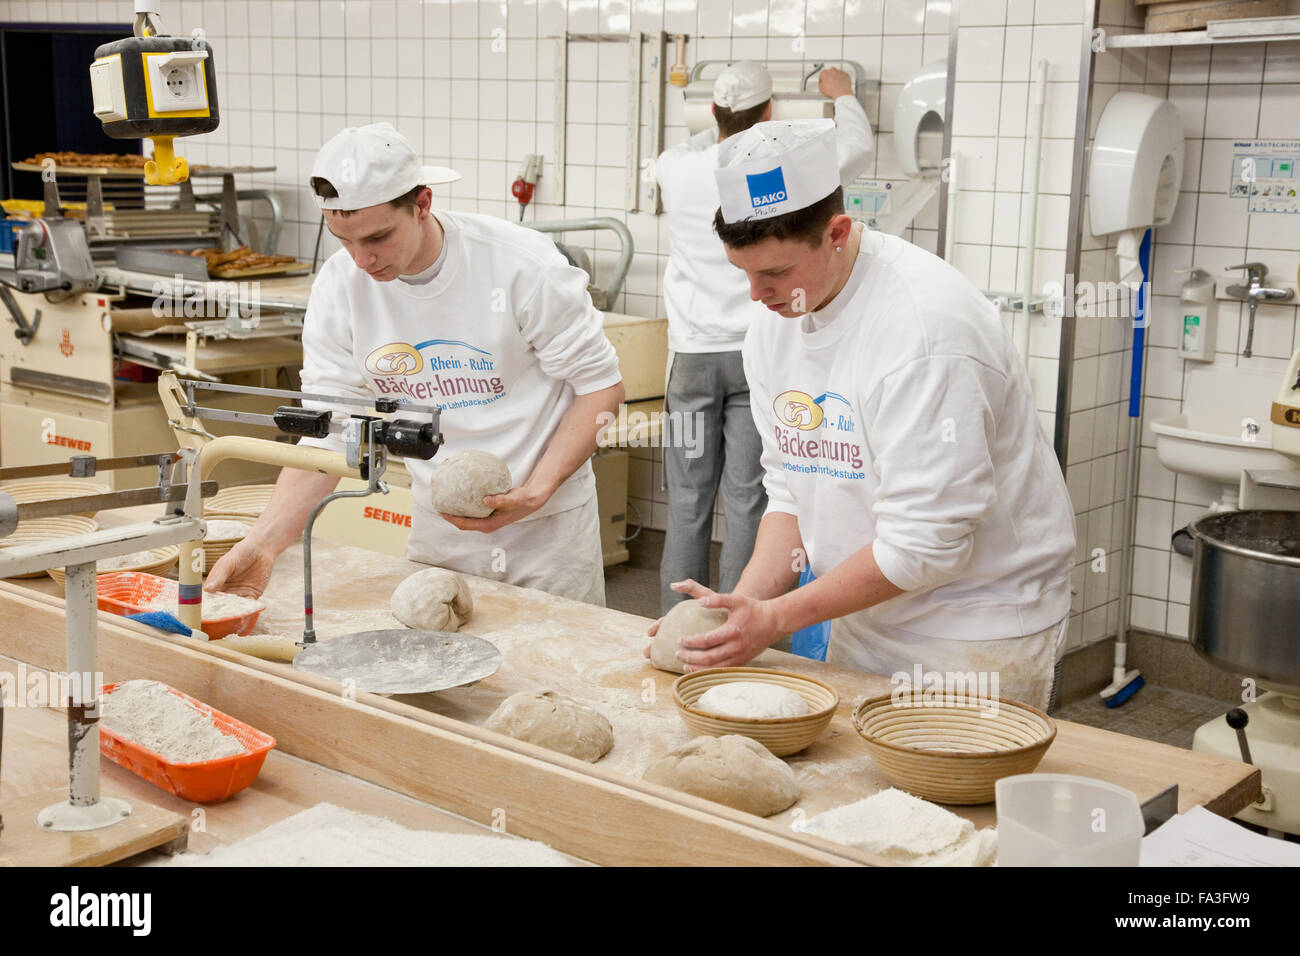 Baker apprentice kneads bread dough. Stock Photo